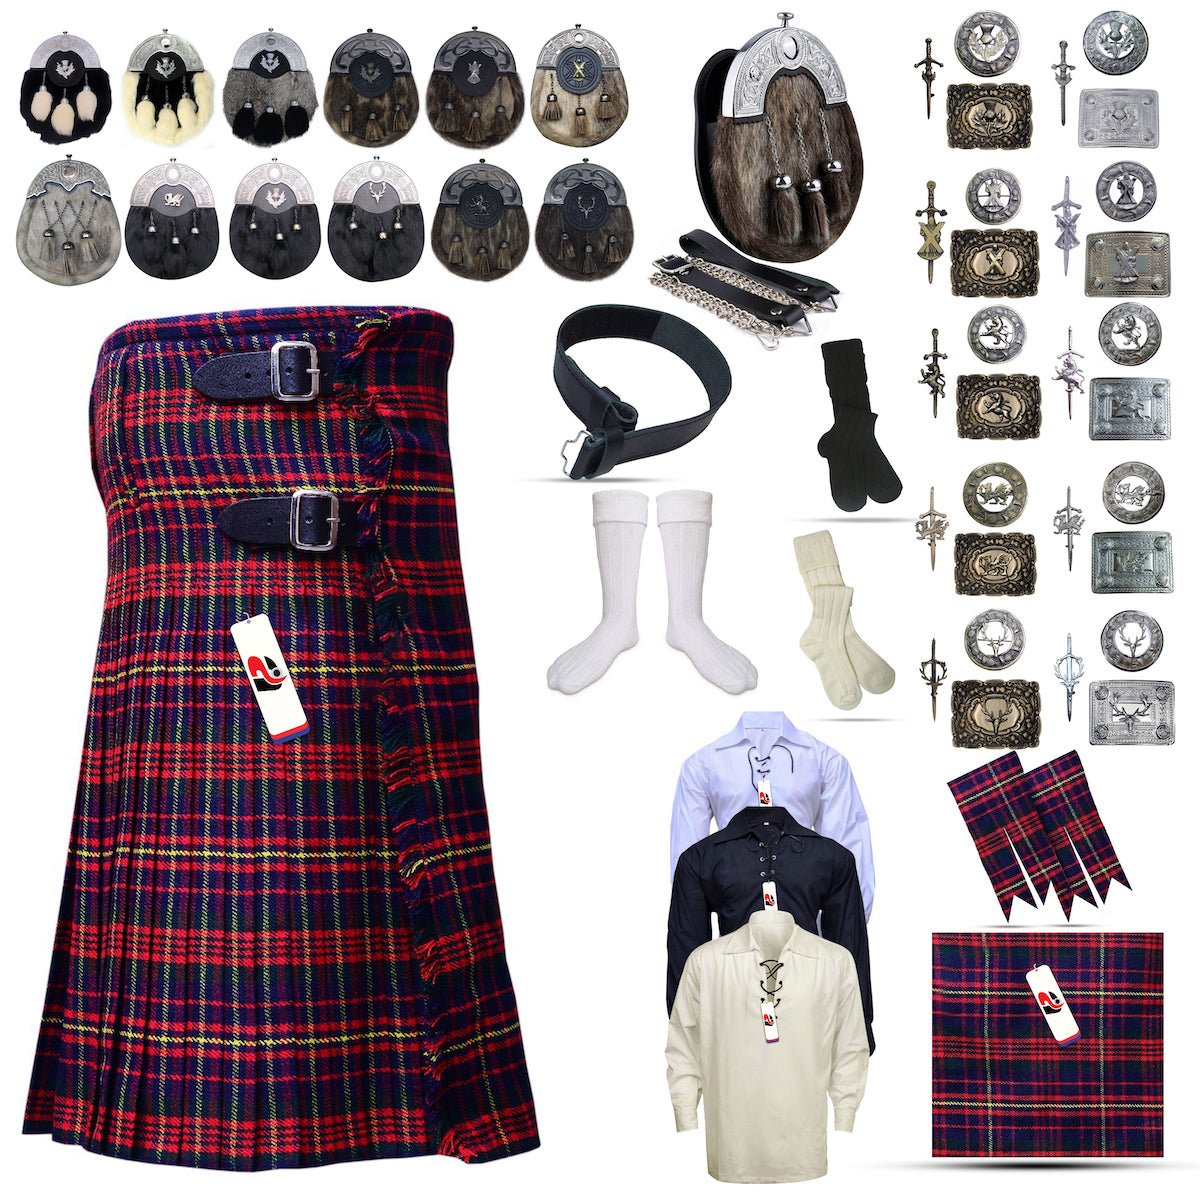 Cameron of Erracht Tartan Kilt Scottish Outfit